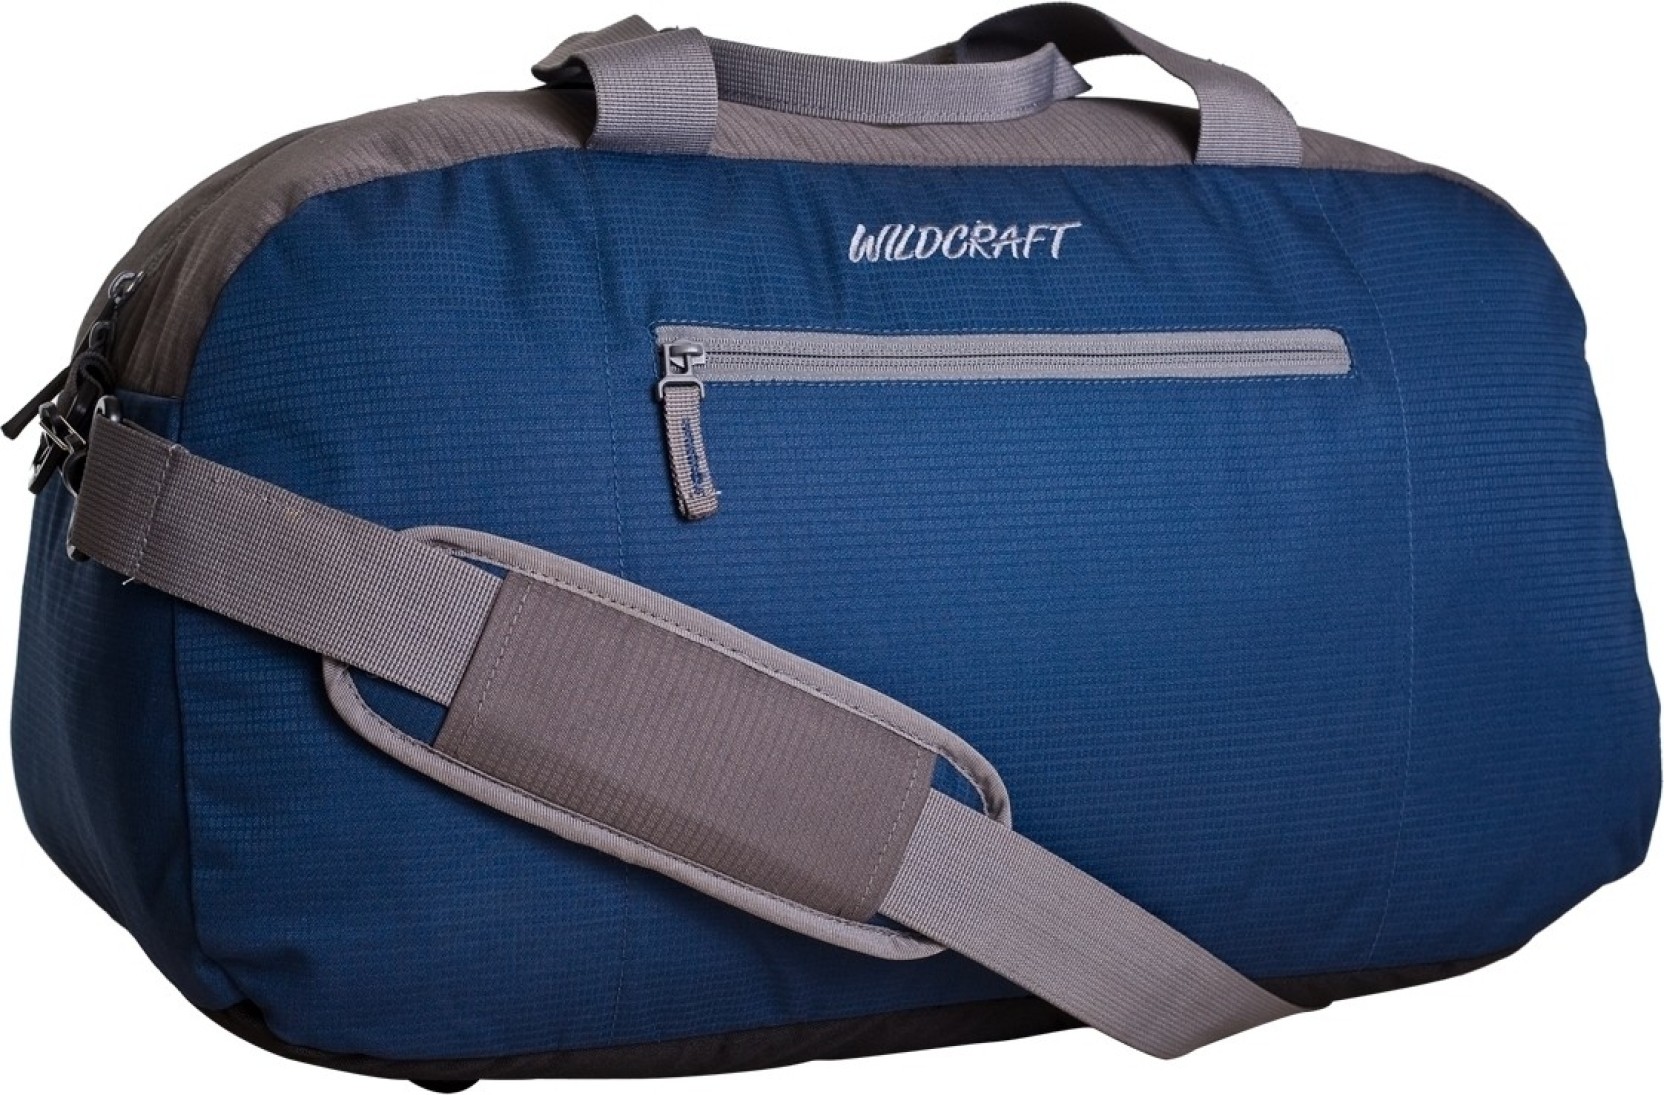 wildcraft travel kit bag